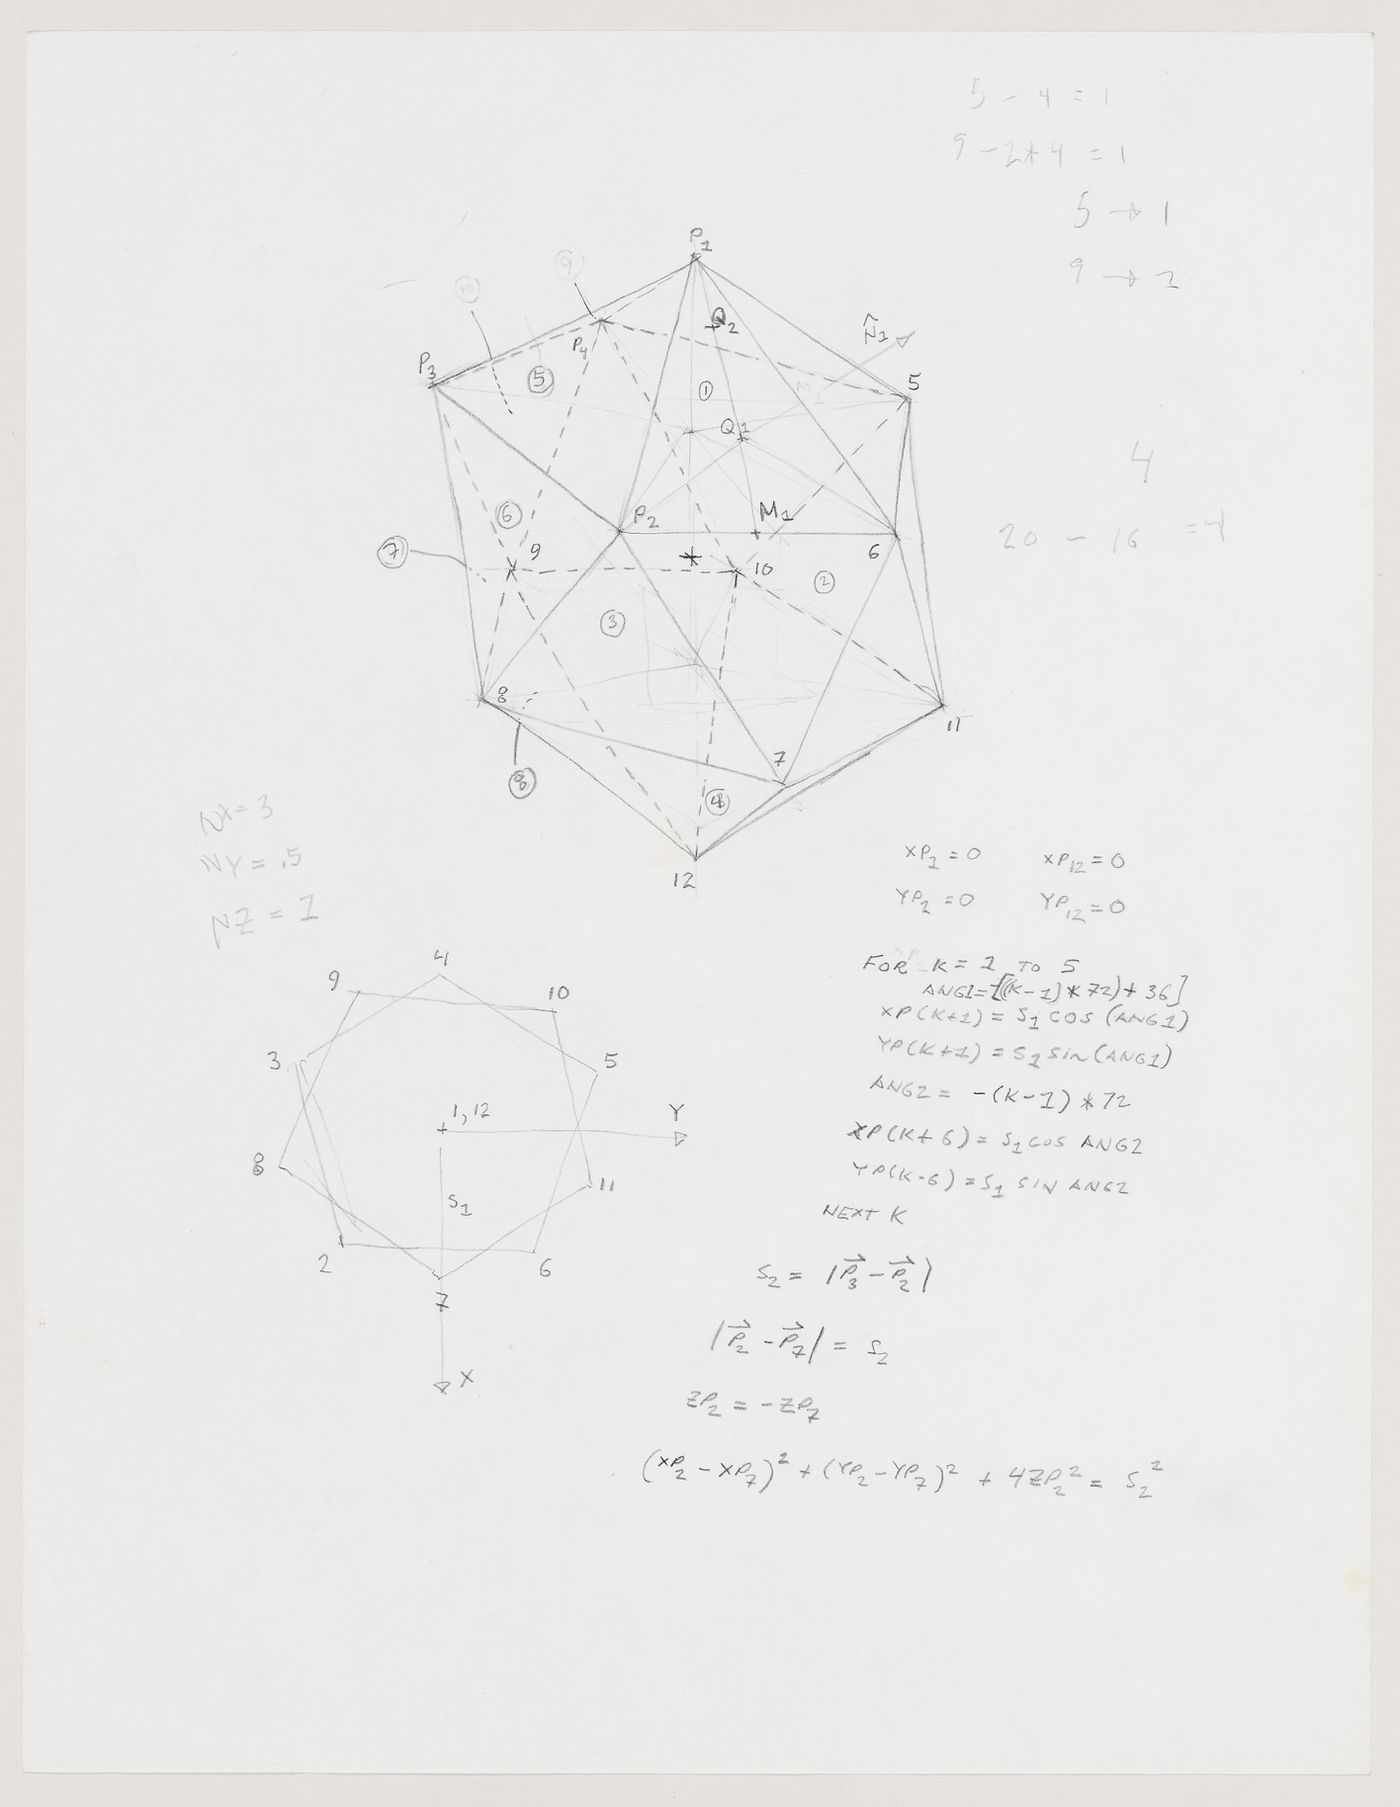 Mathematics for expanding icosahedron design shown in original U.S. patent 4,942,700